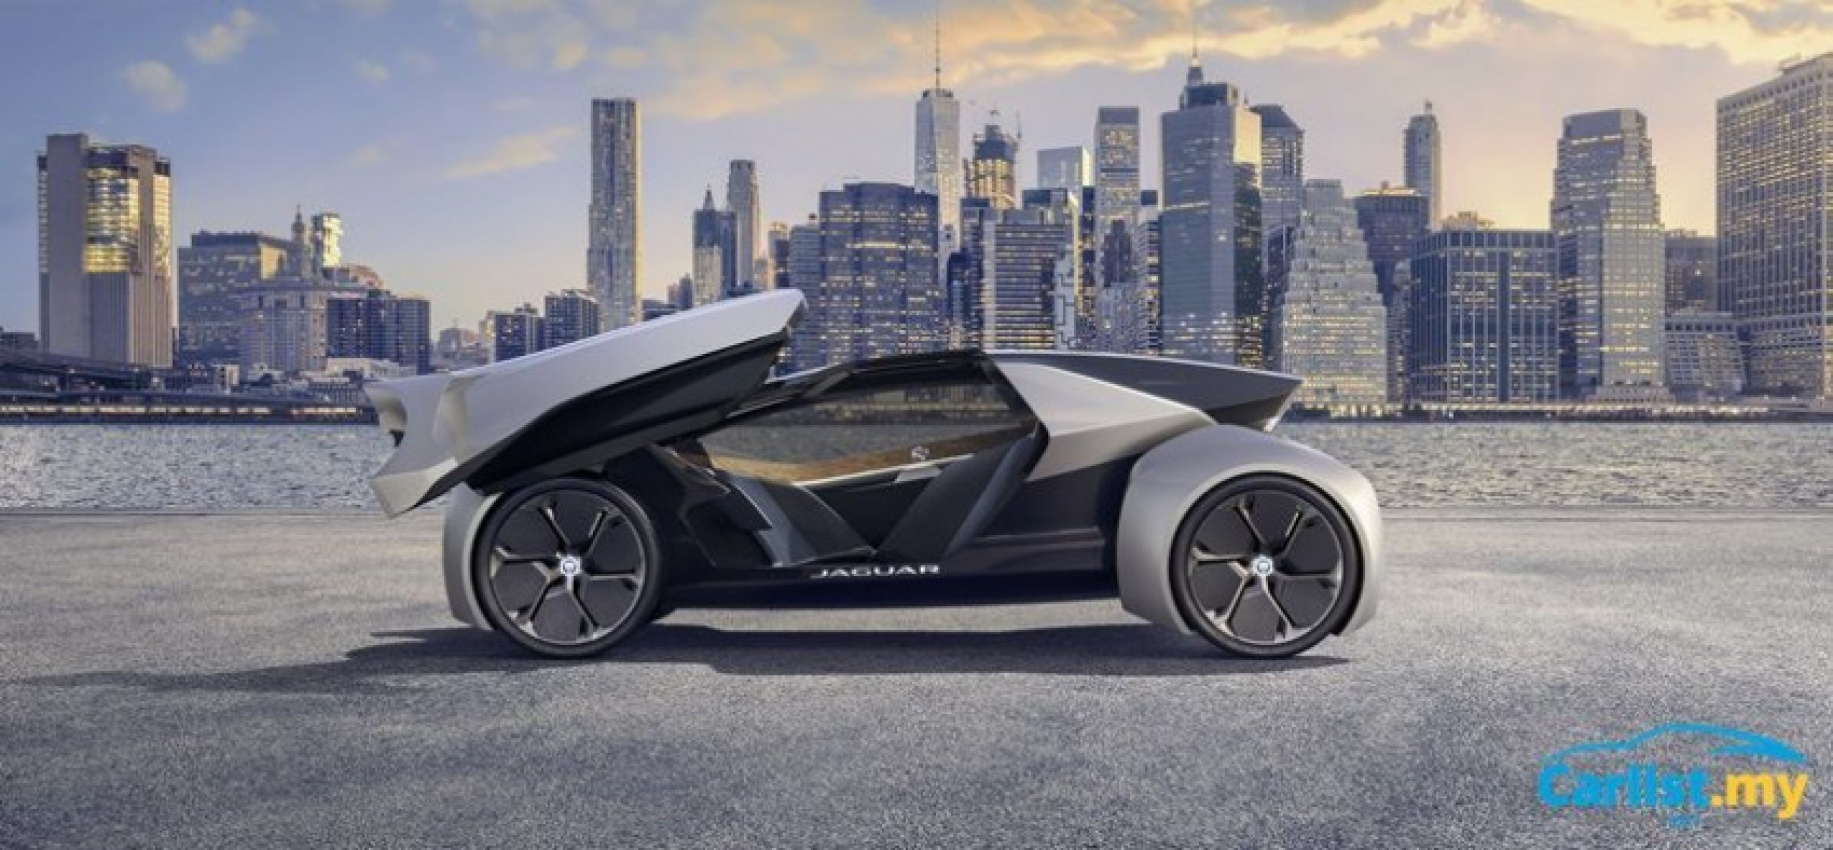 autos, cars, jaguar, auto news, future-type, jaguar future-type, jaguar future-type concept – fully-charged ev and on-demand